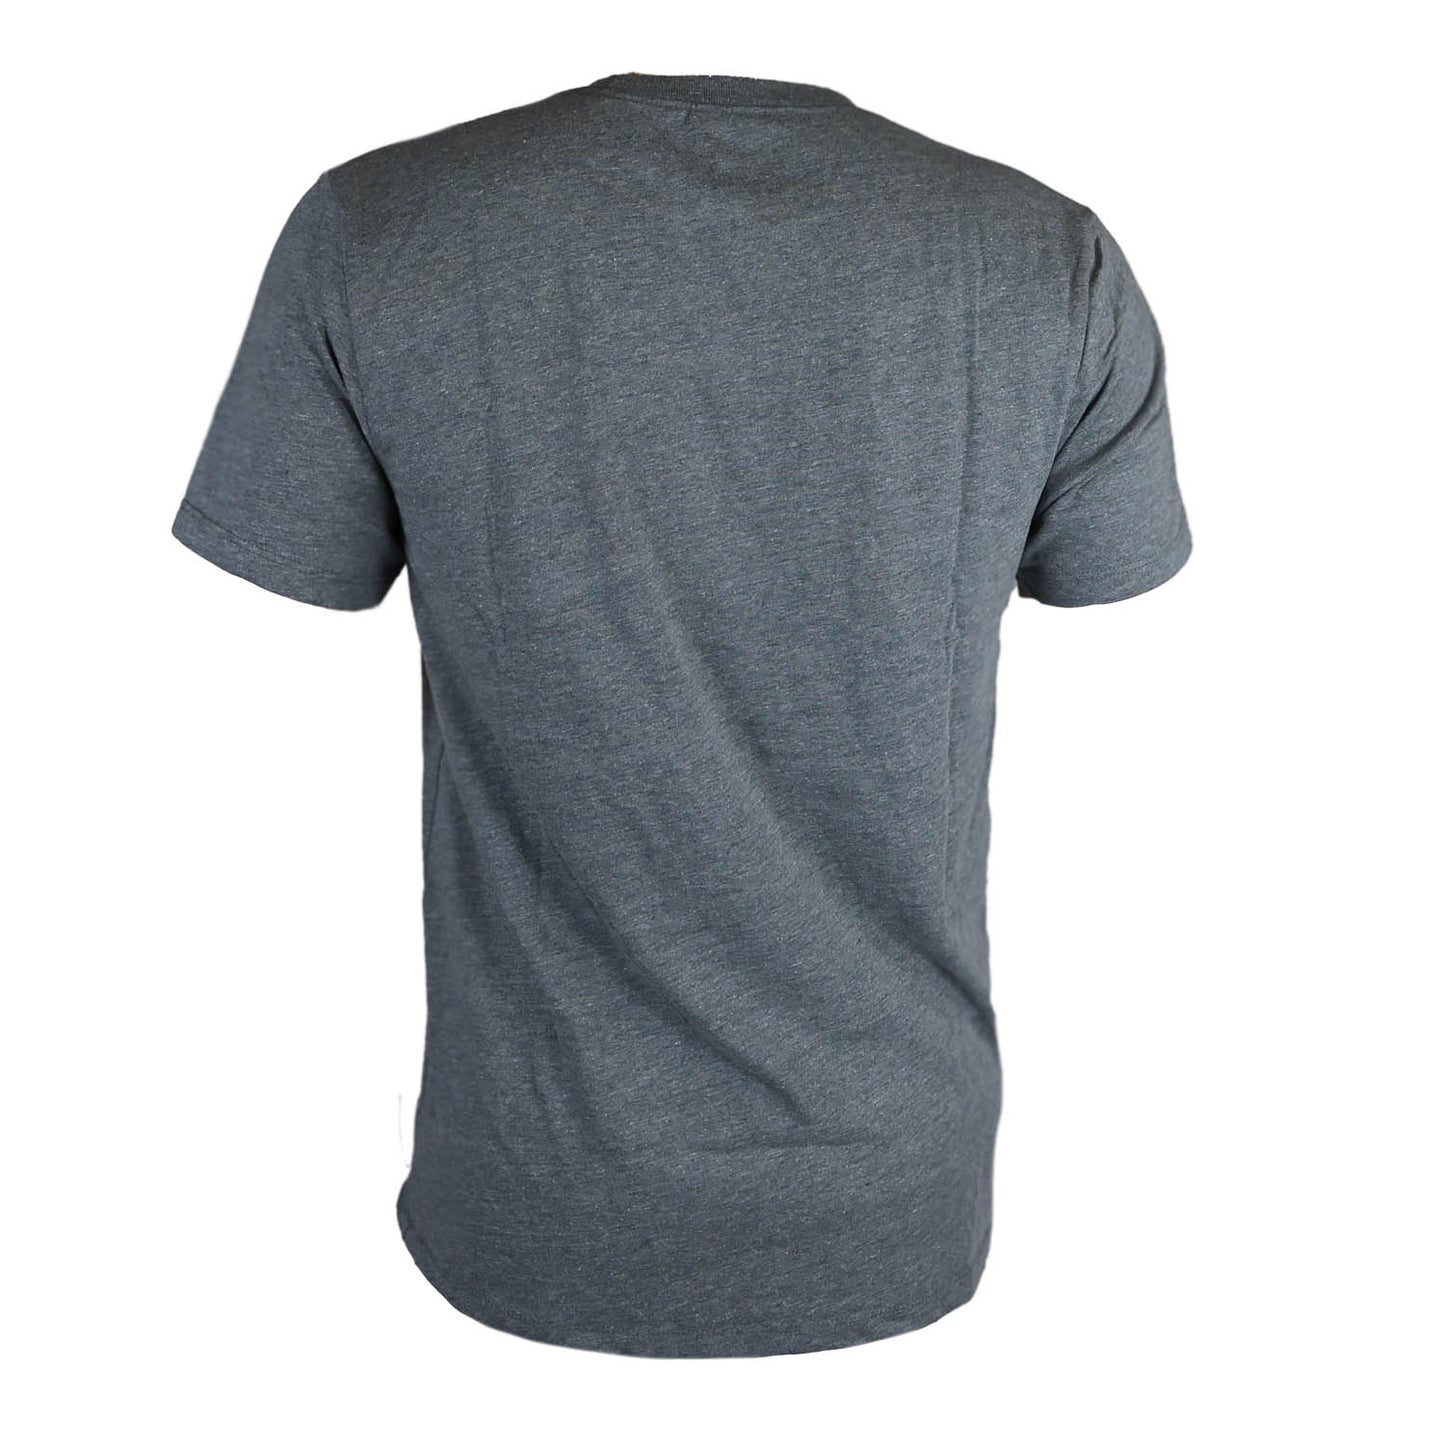 Back of gray shirt